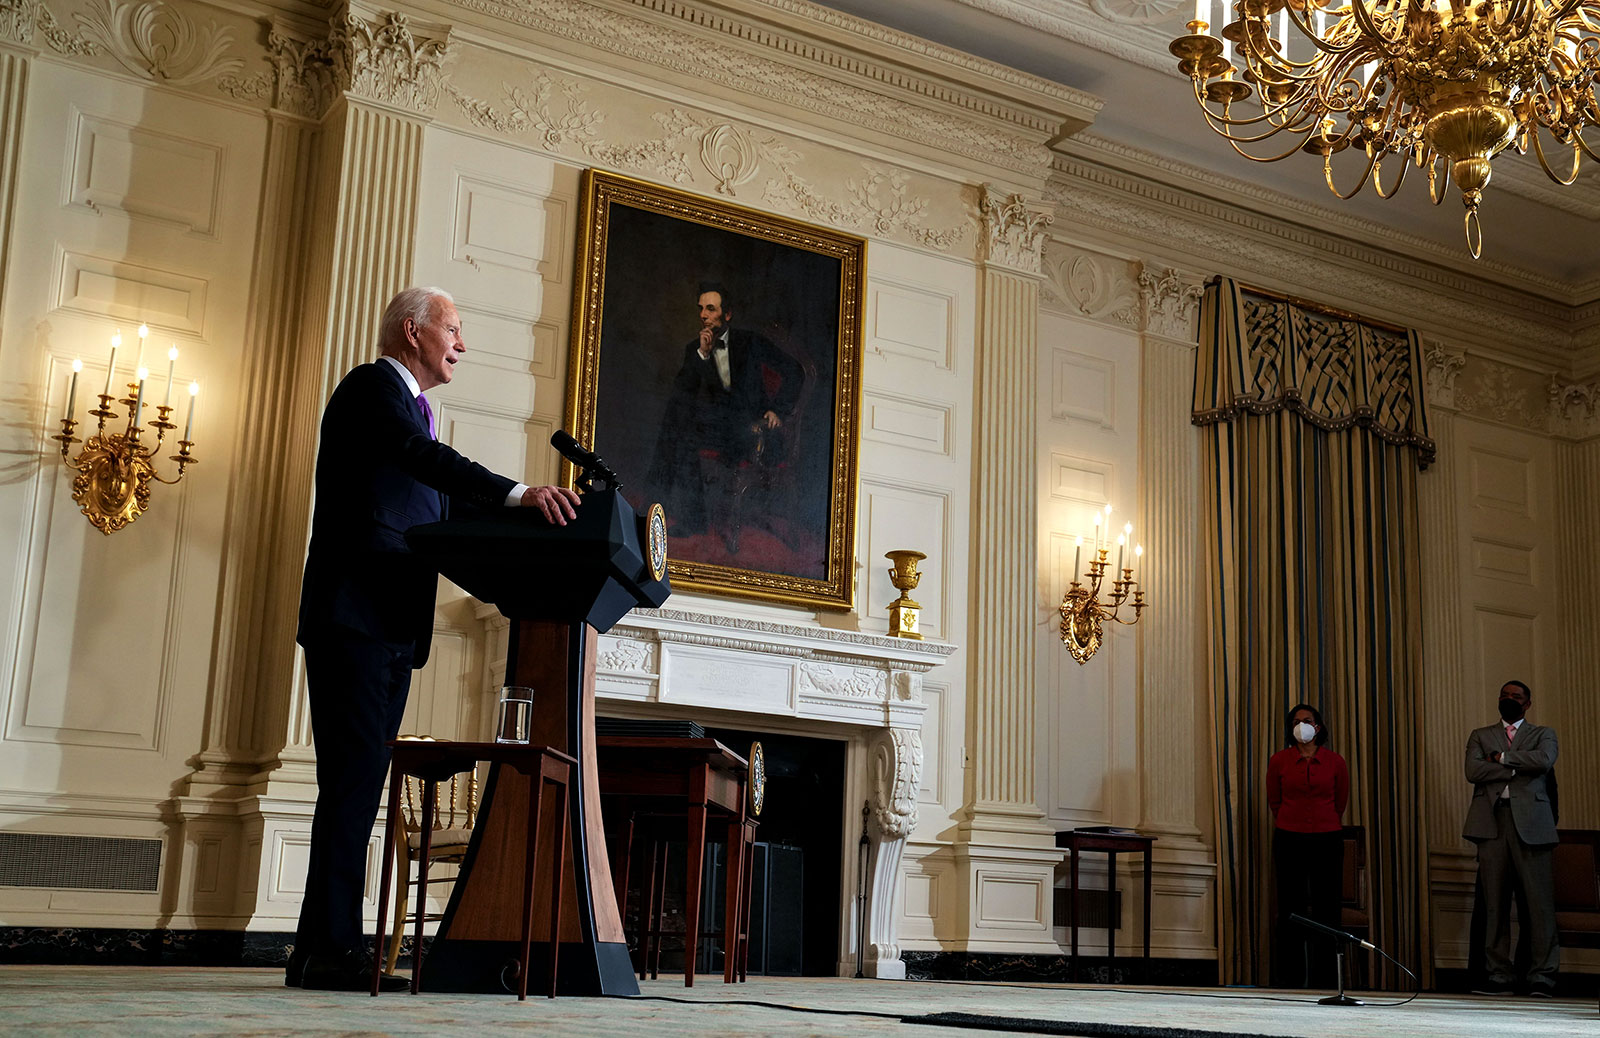 President Biden speaks at the White House on Tuesday, January 26.